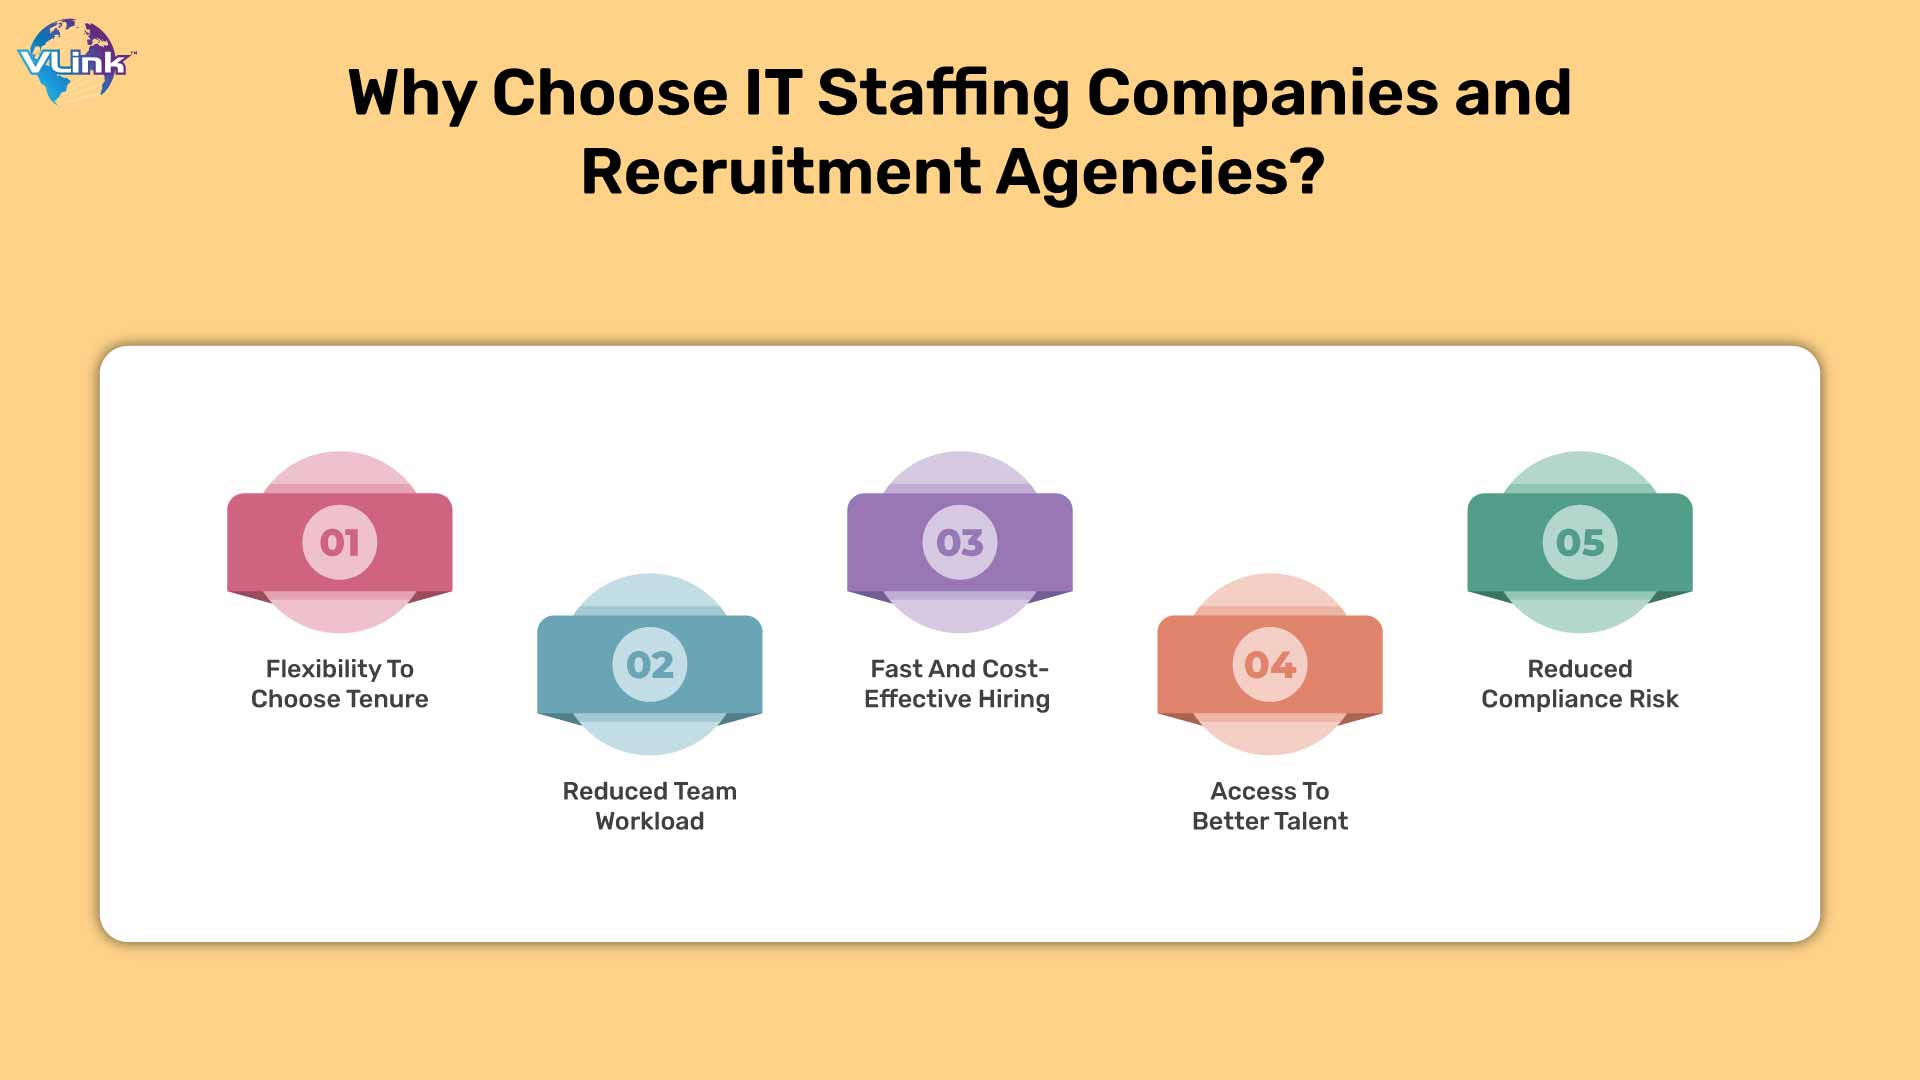 Benefits of Using IT Recruitment Agencies